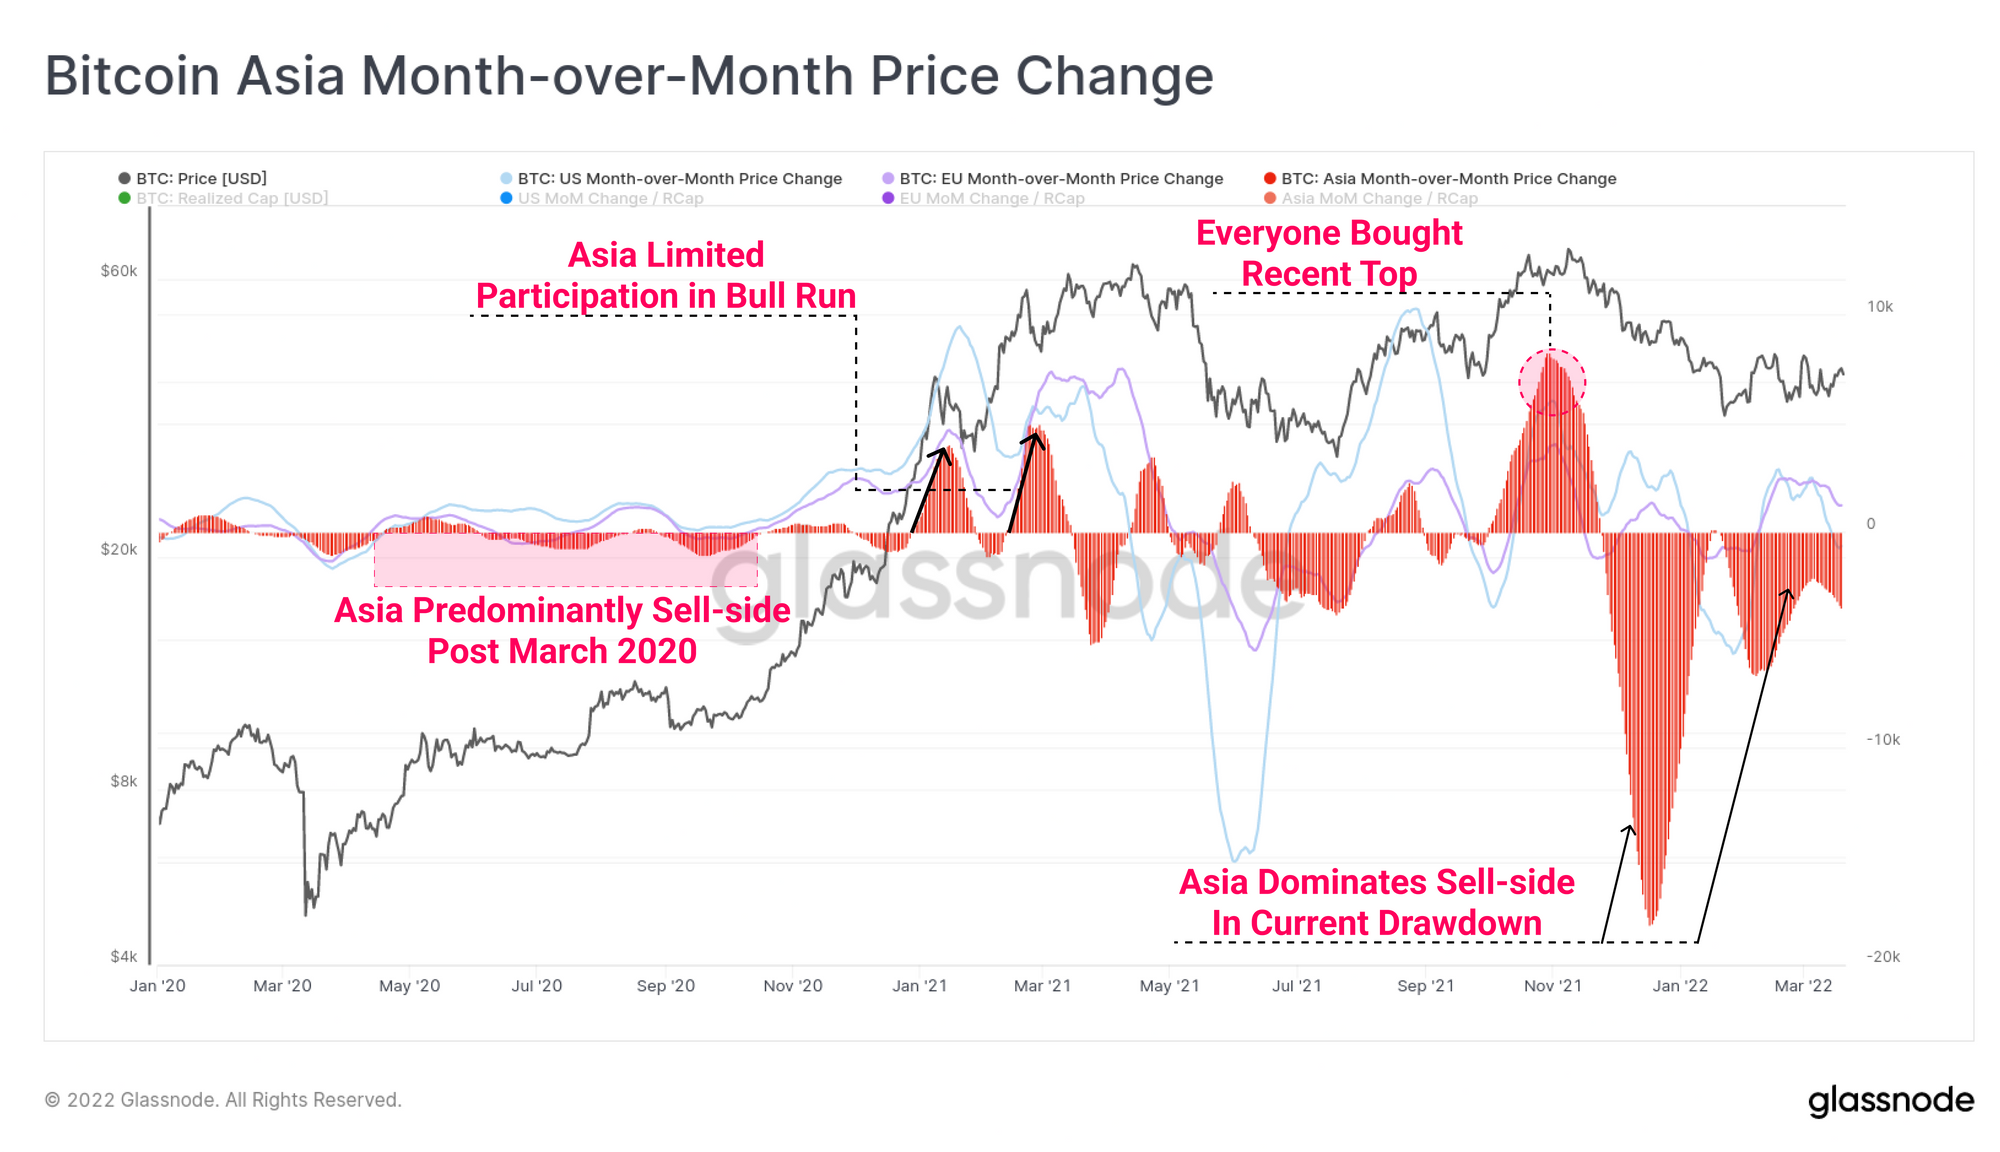 Bitcoin Asia Price Change